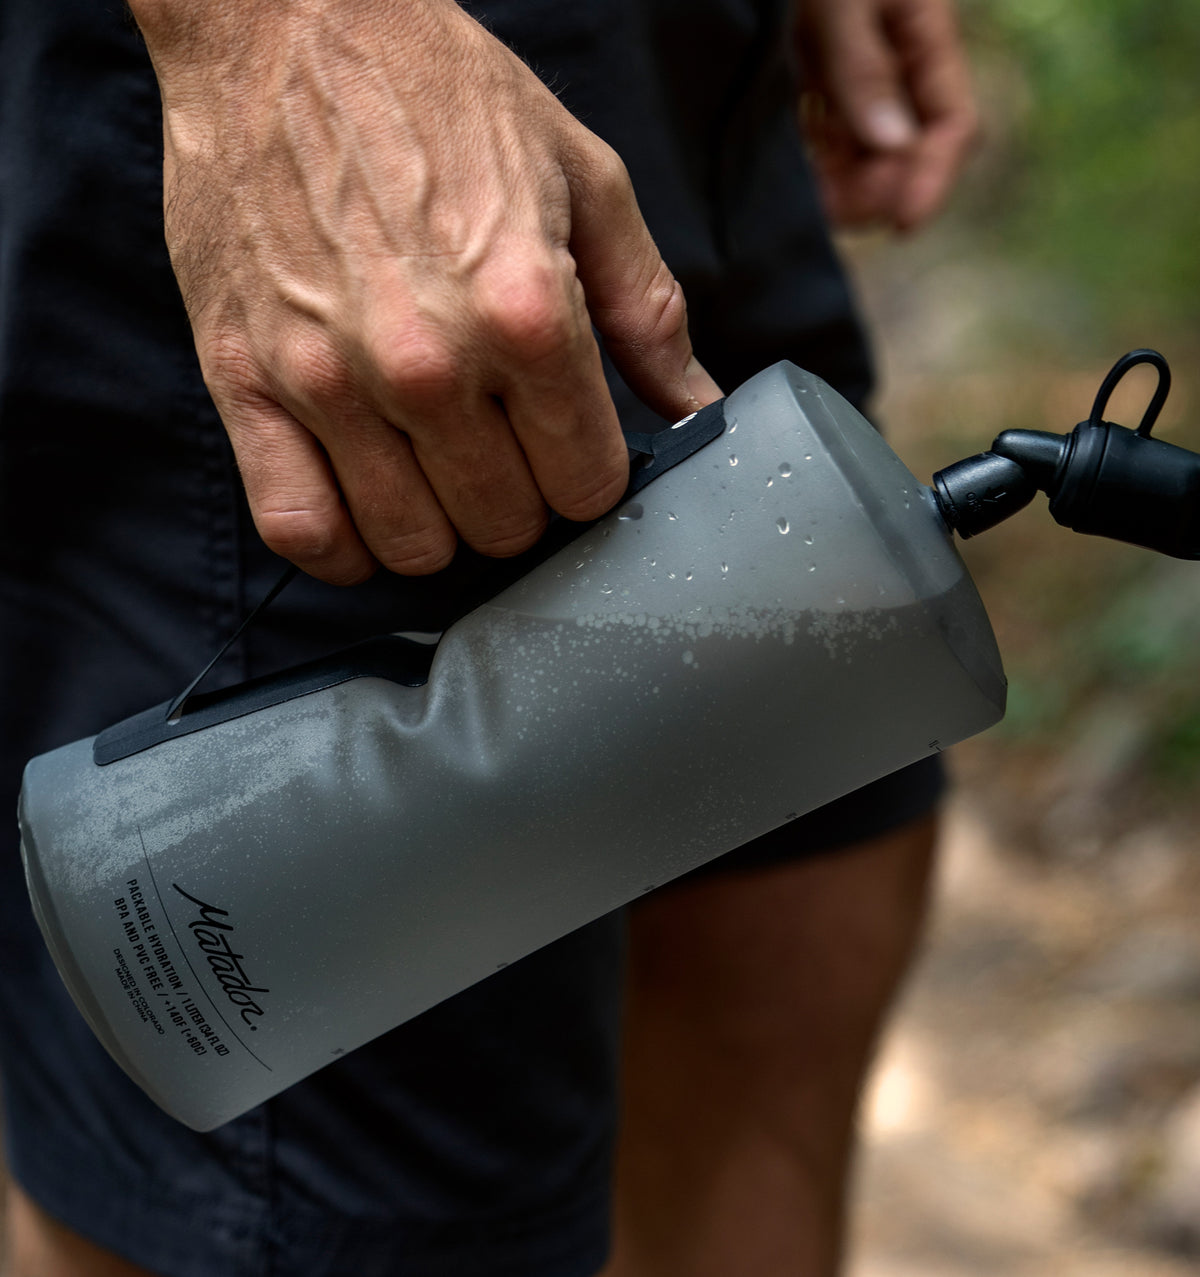 Matador Packable Water Bottle 1L - Charcoal